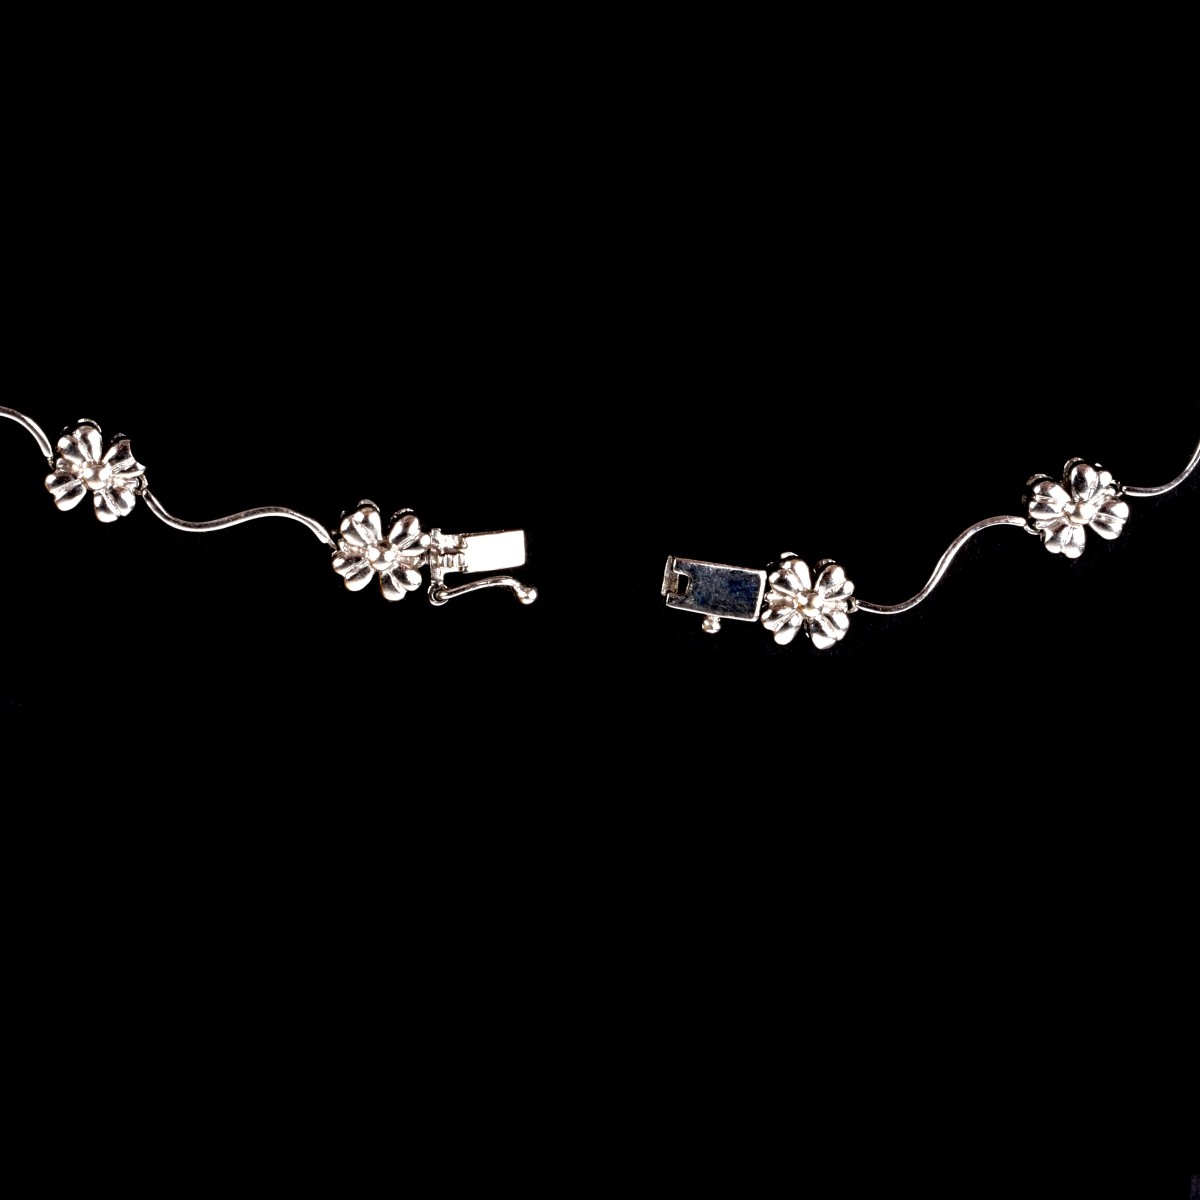 Gemstone, Diamond and 14K Necklace